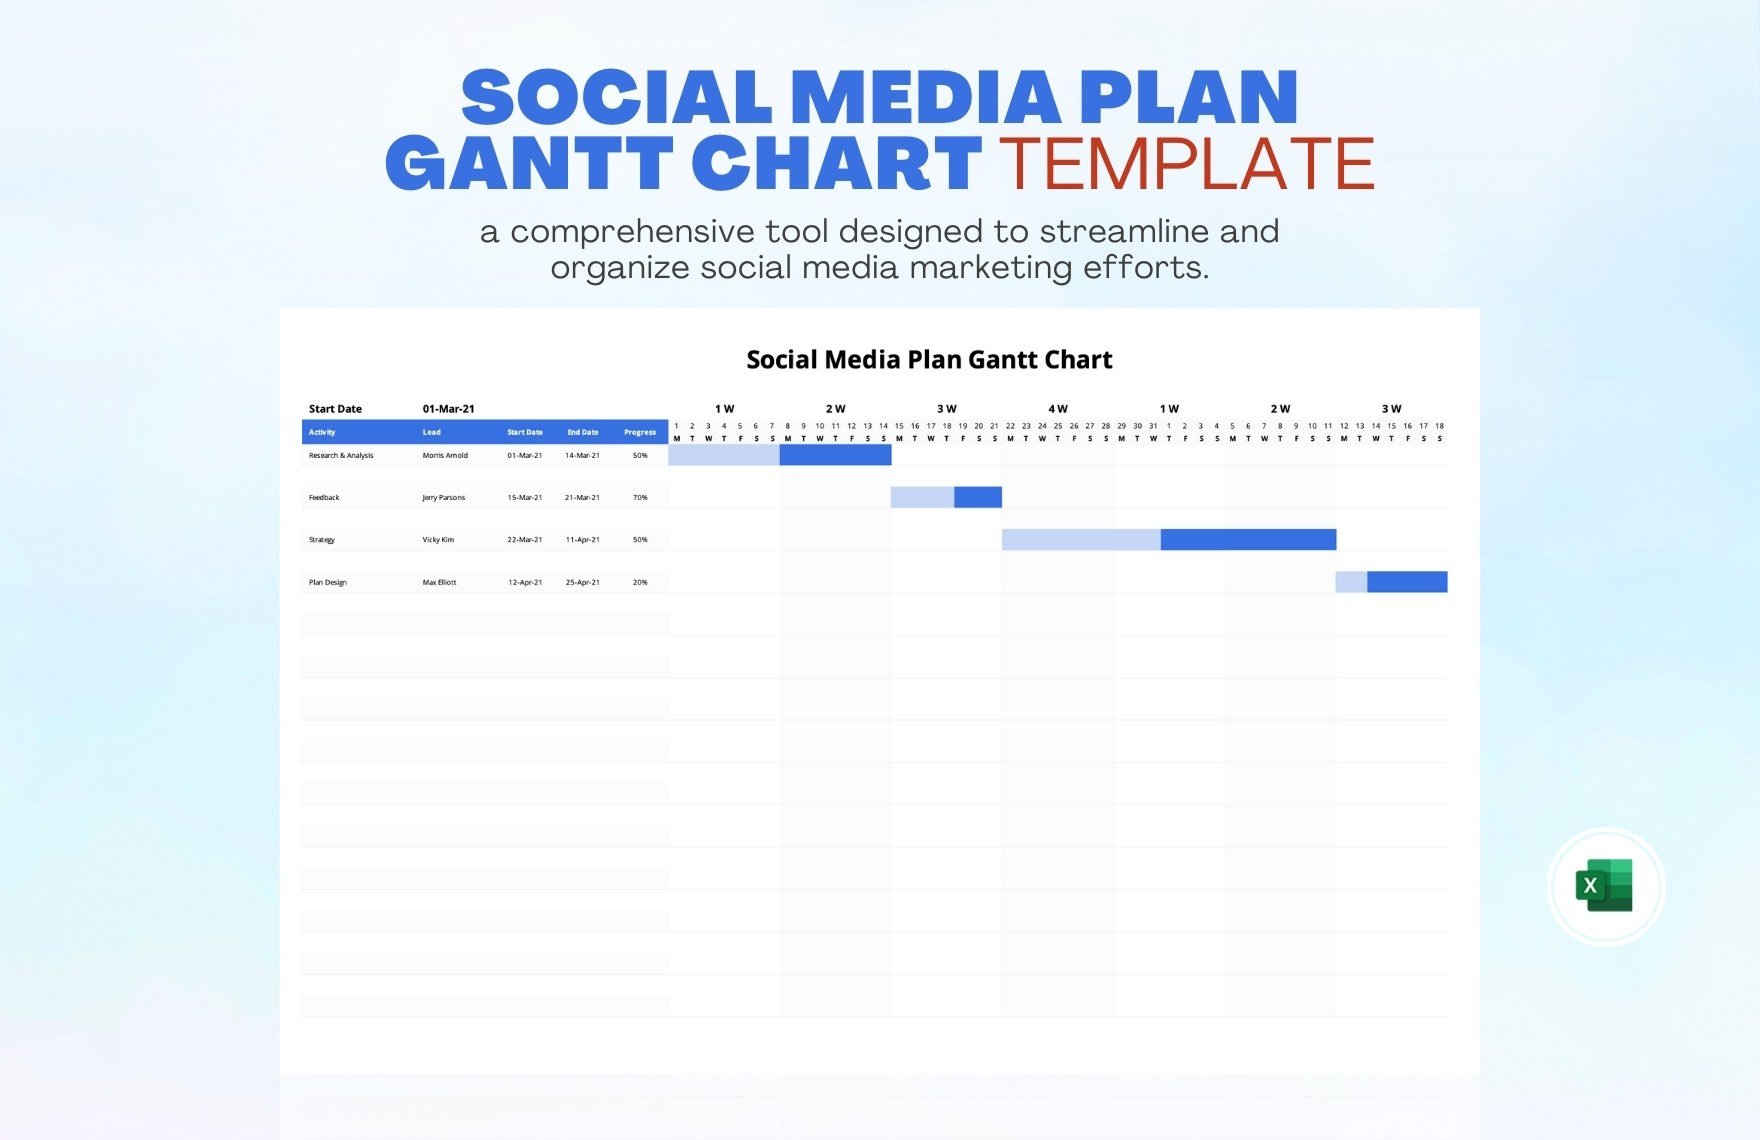 Social Media Plan Gantt Chart Template in Excel